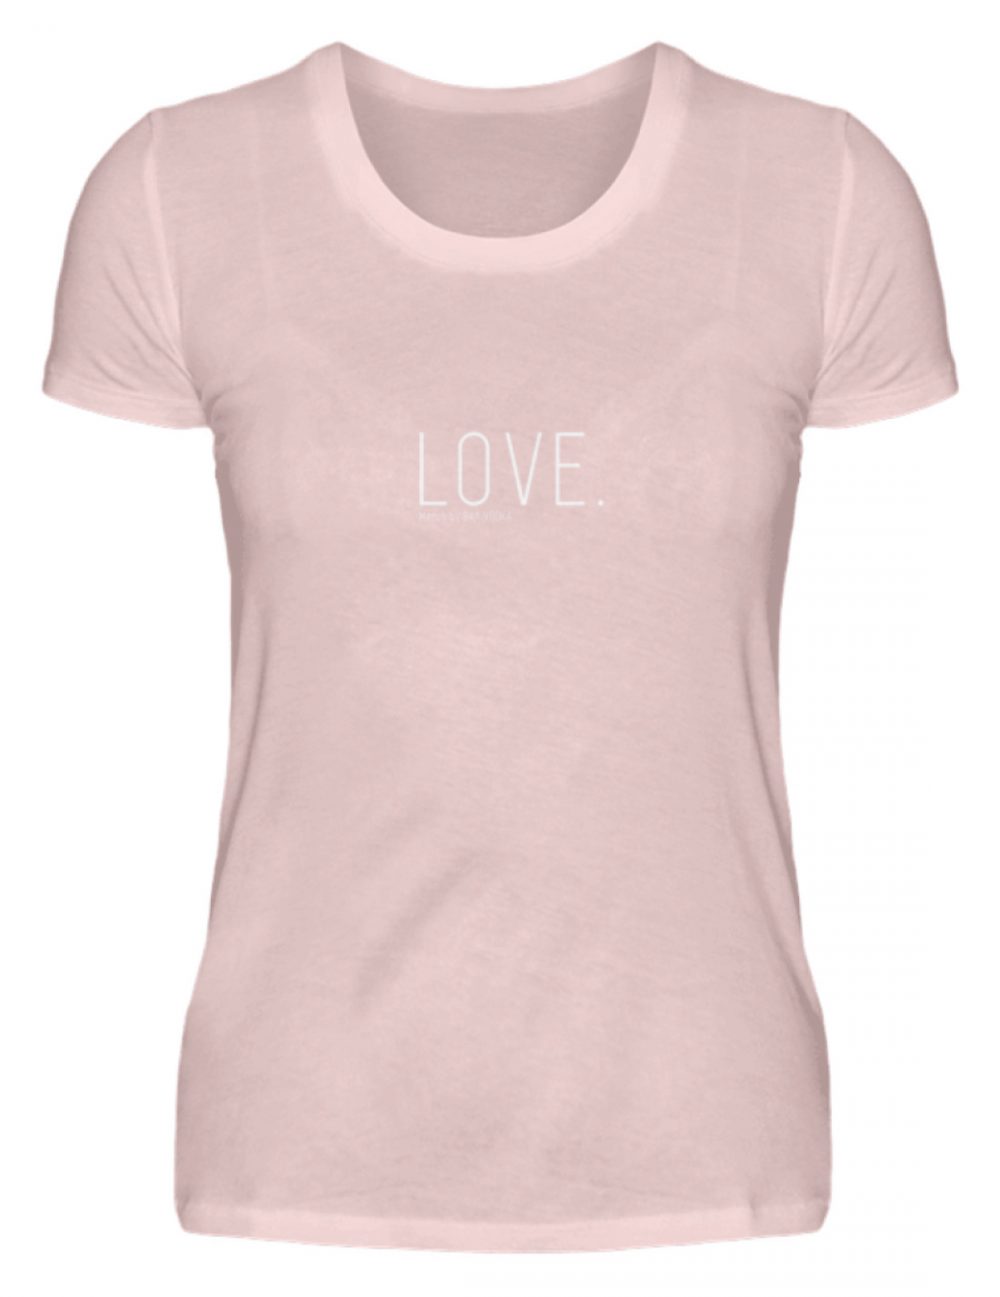 LOVE. - Damen Premiumshirt-5949